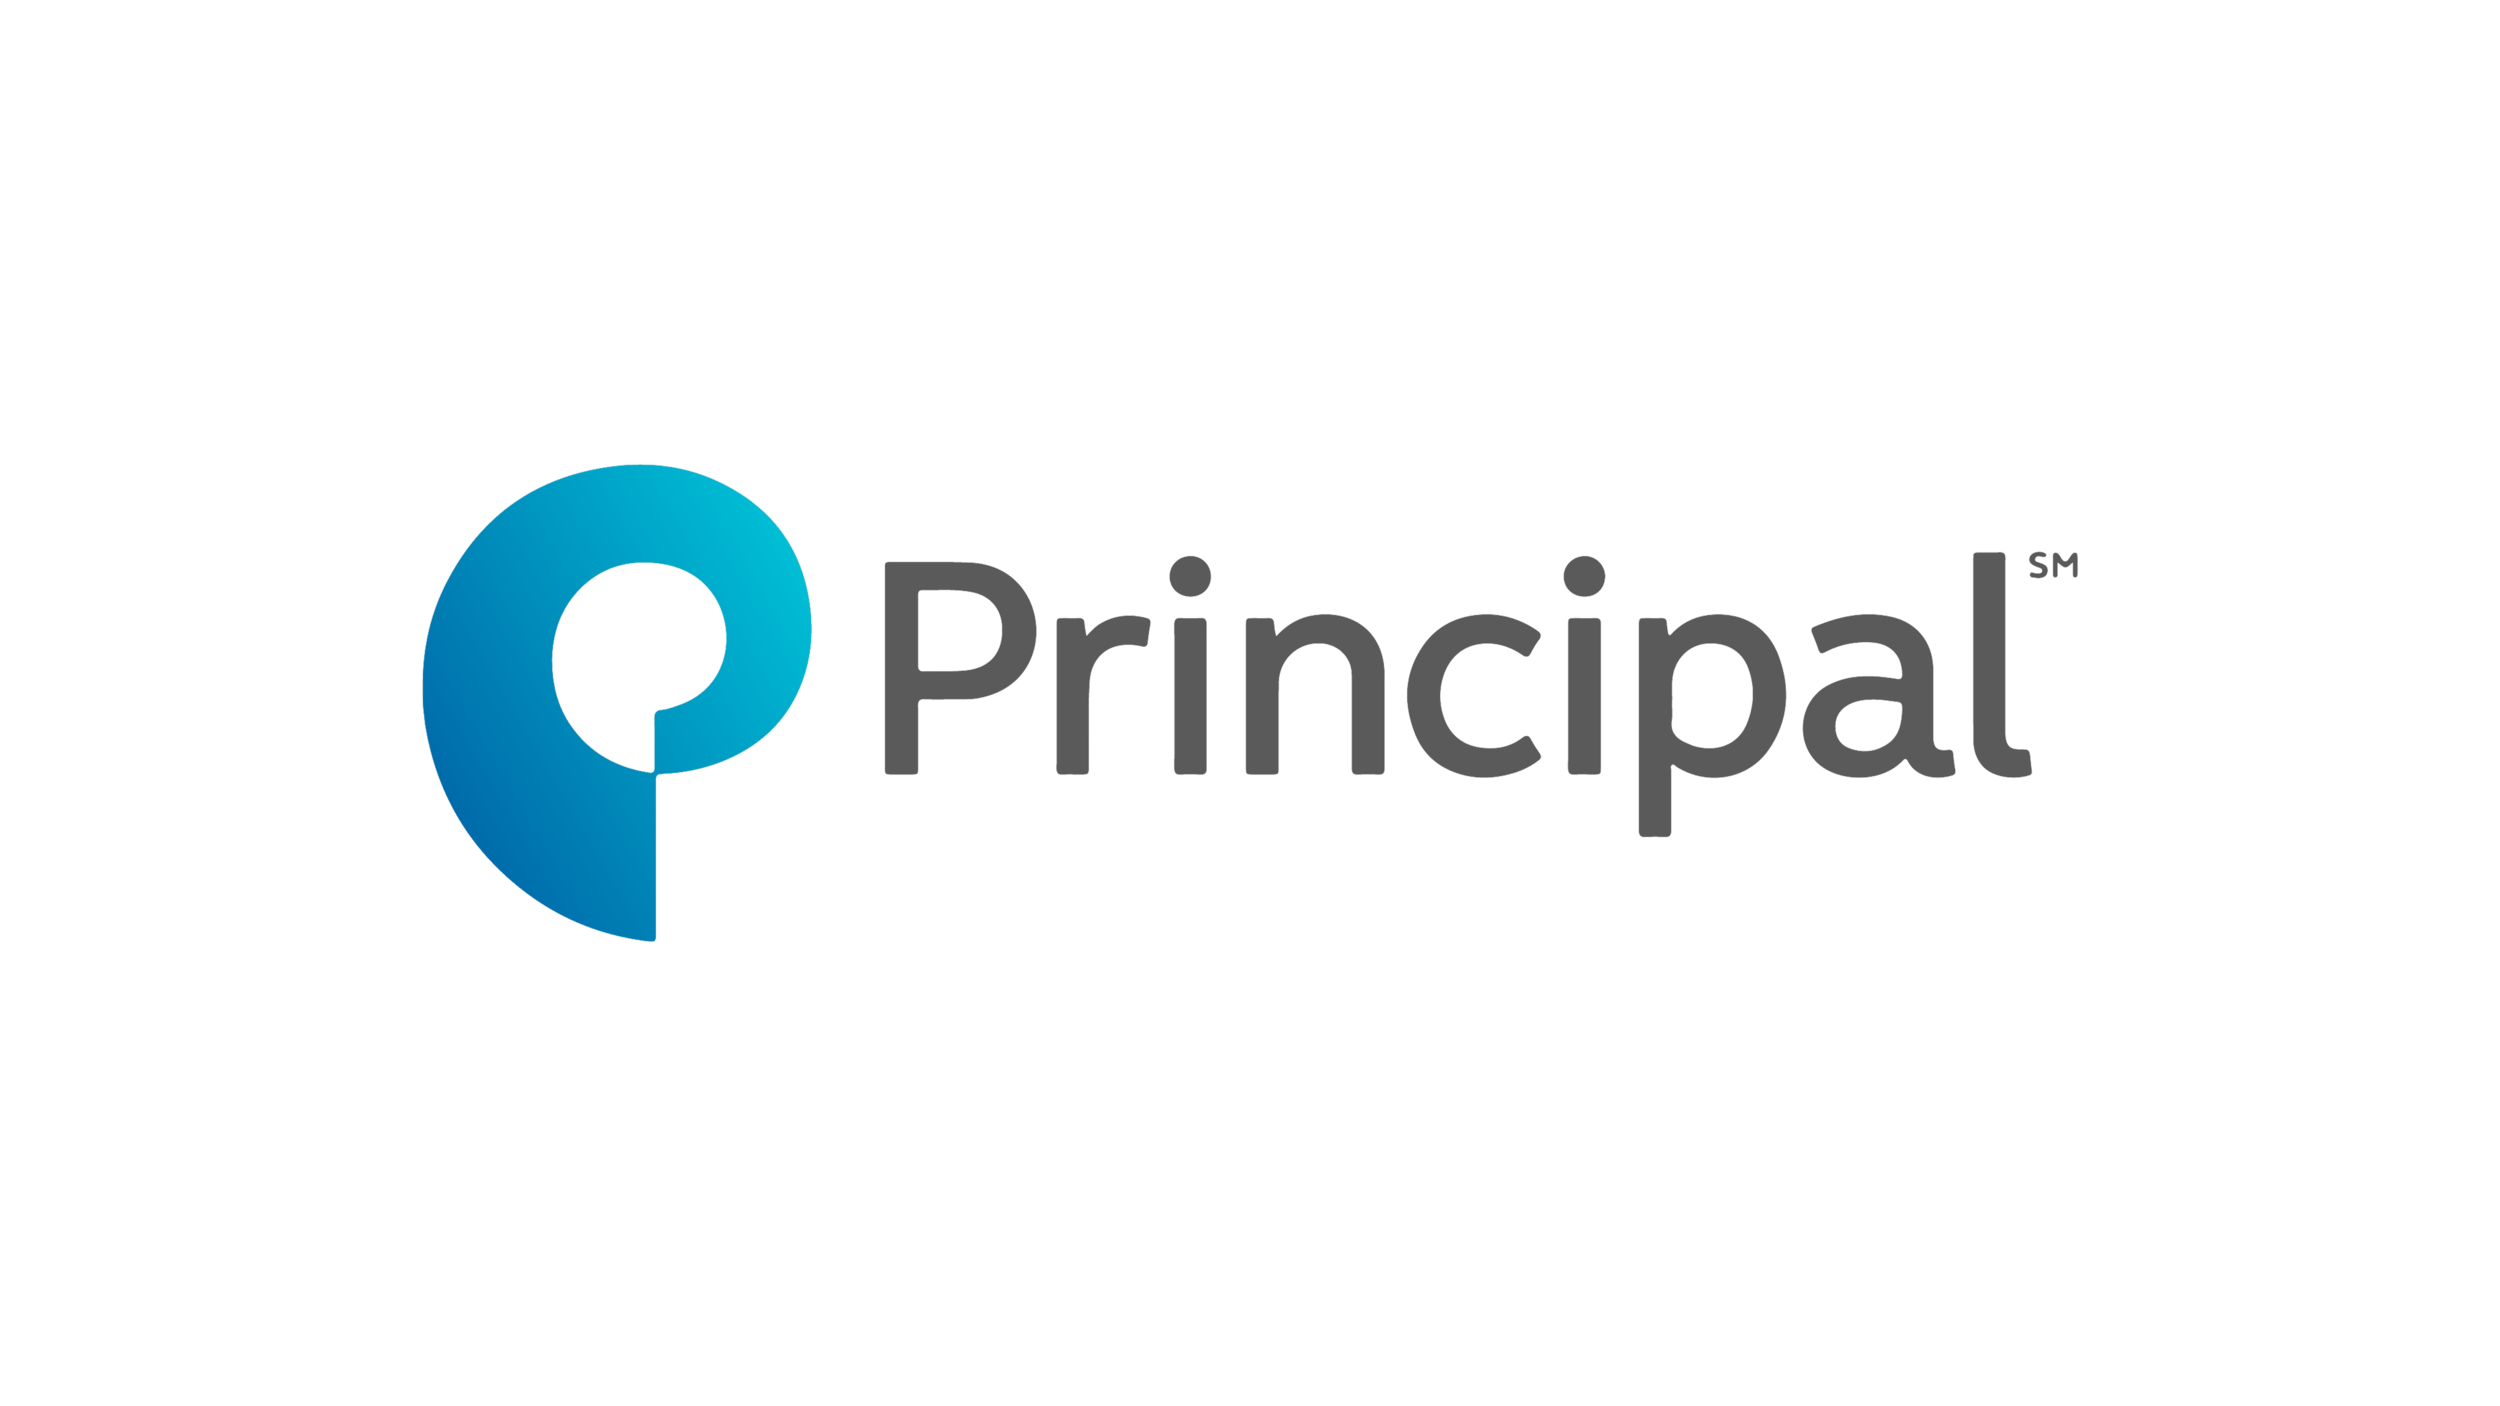 Principal logo